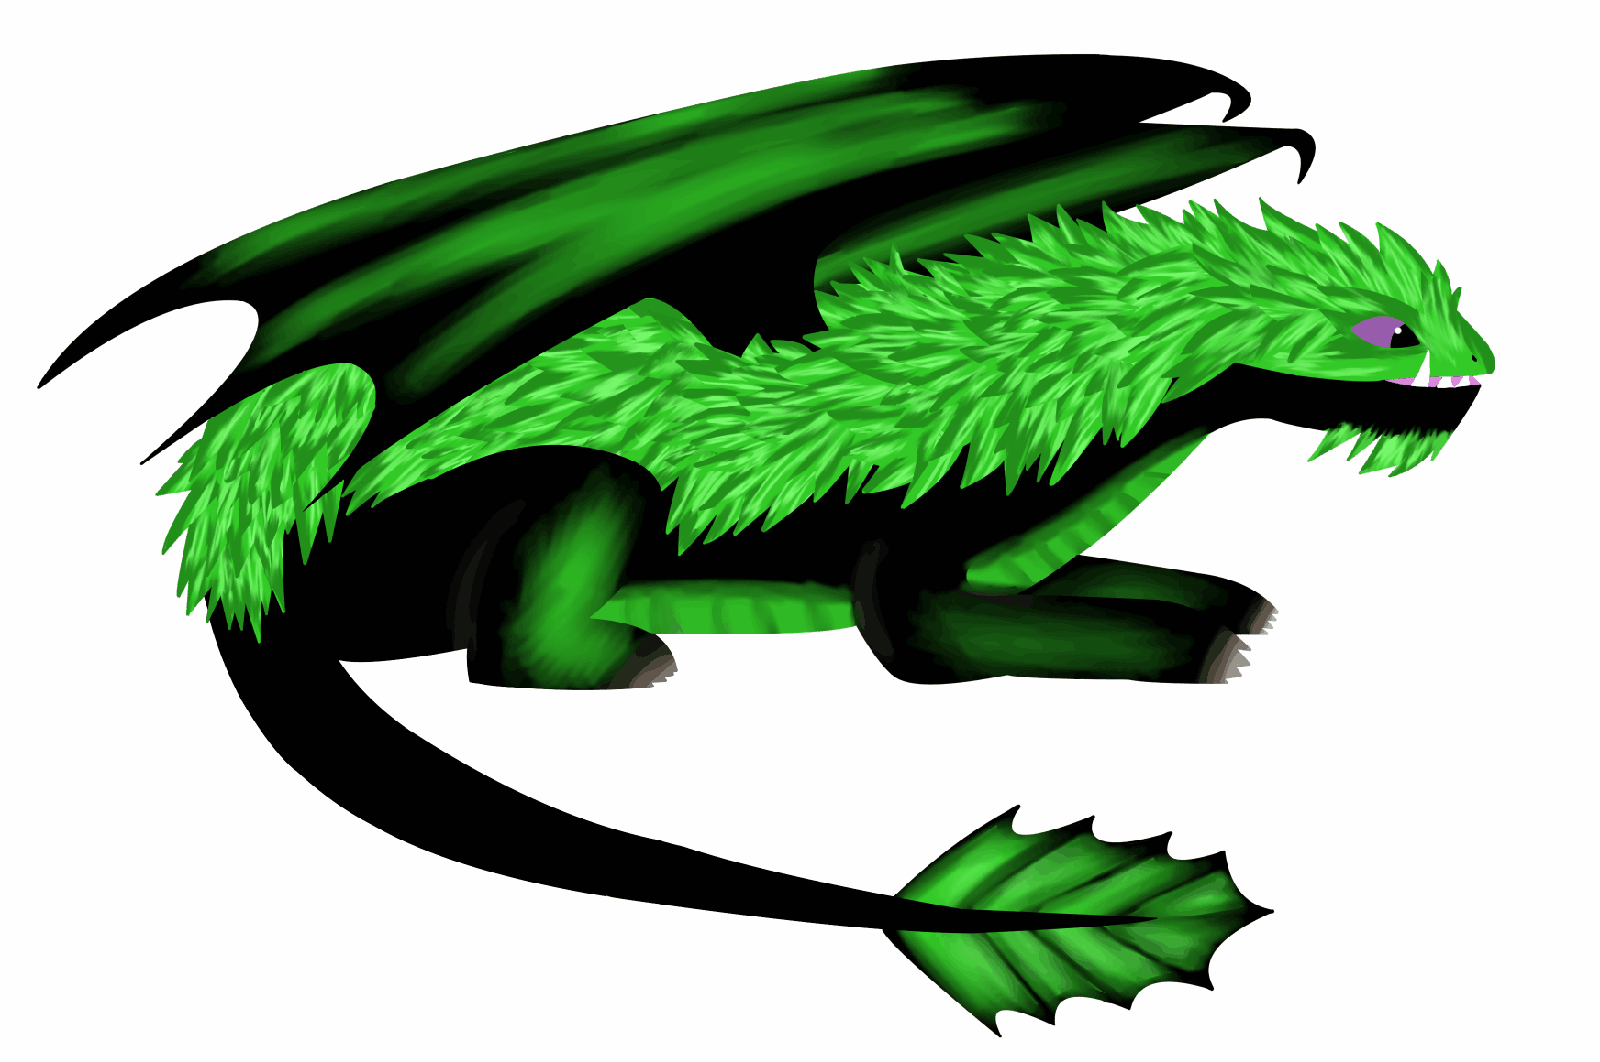 Dragon gif. Дракон. Зелёный дракон. Анимированный дракон. Зеленый дракон на прозрачном фоне.